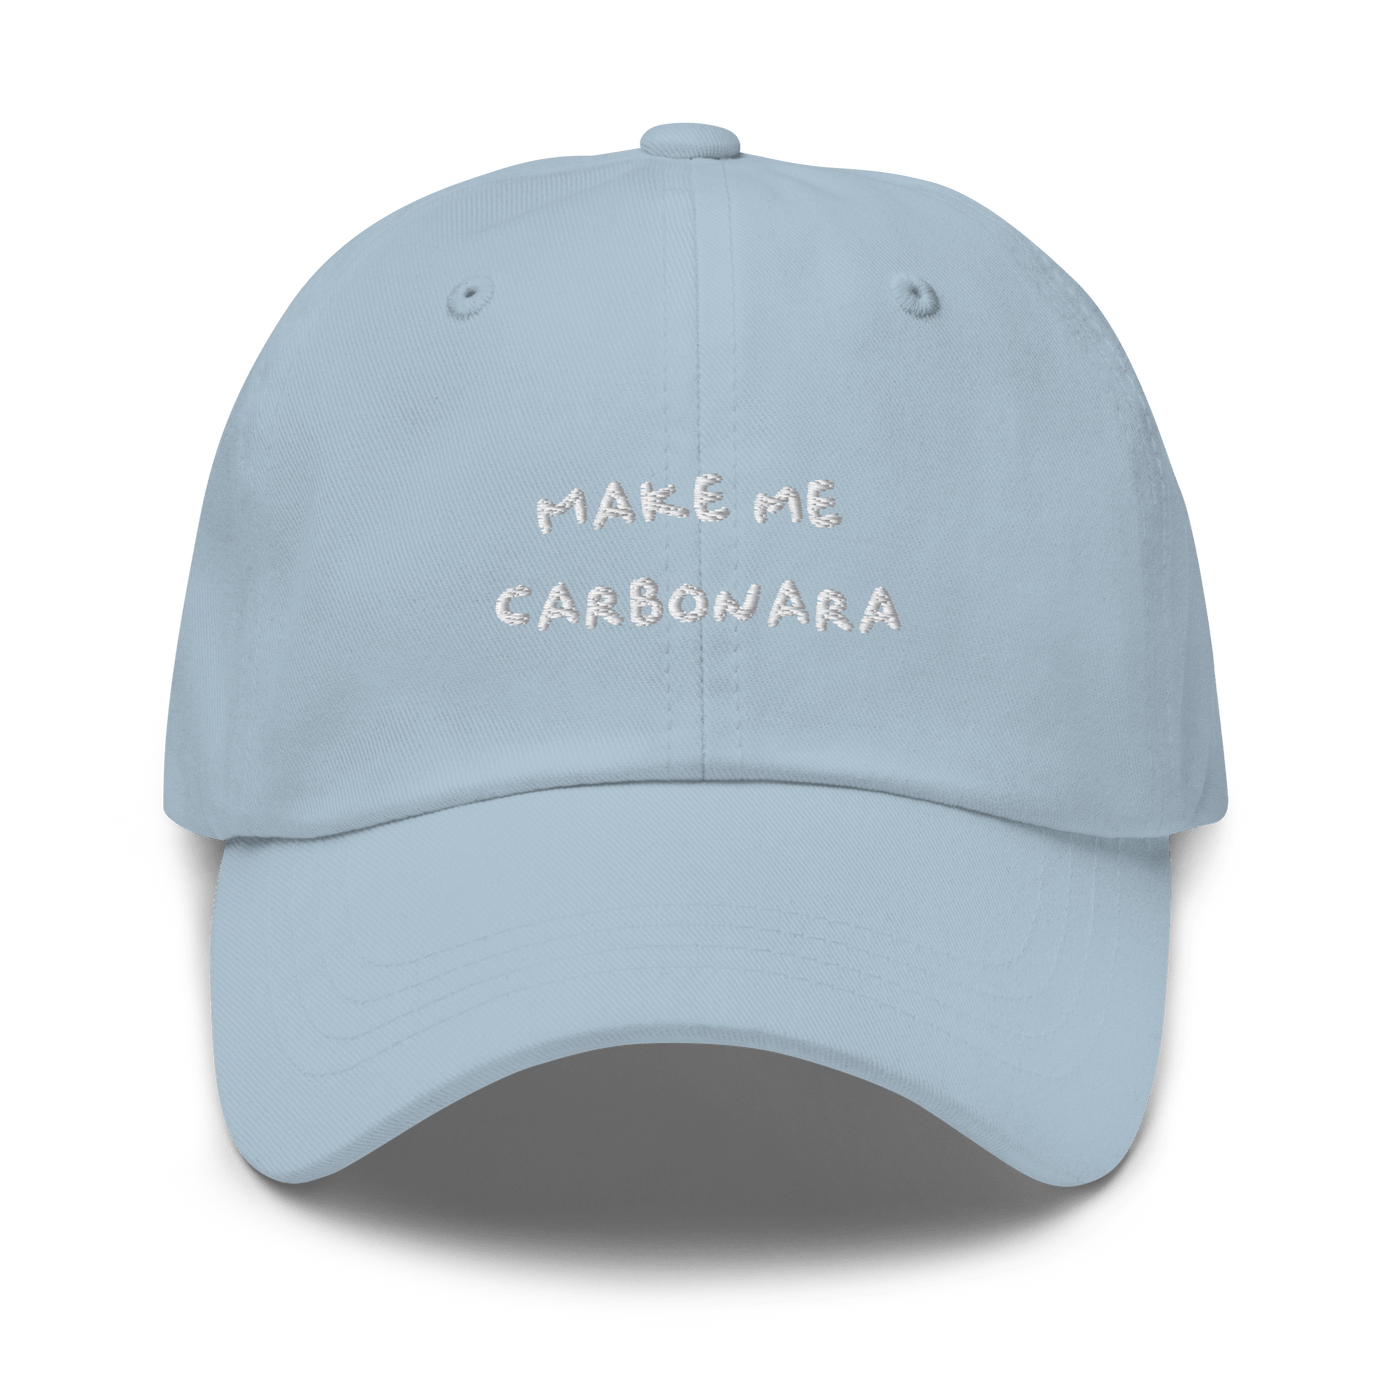 Make me Carbonara Dad hat - Light Blue - - Just Another Cap Store